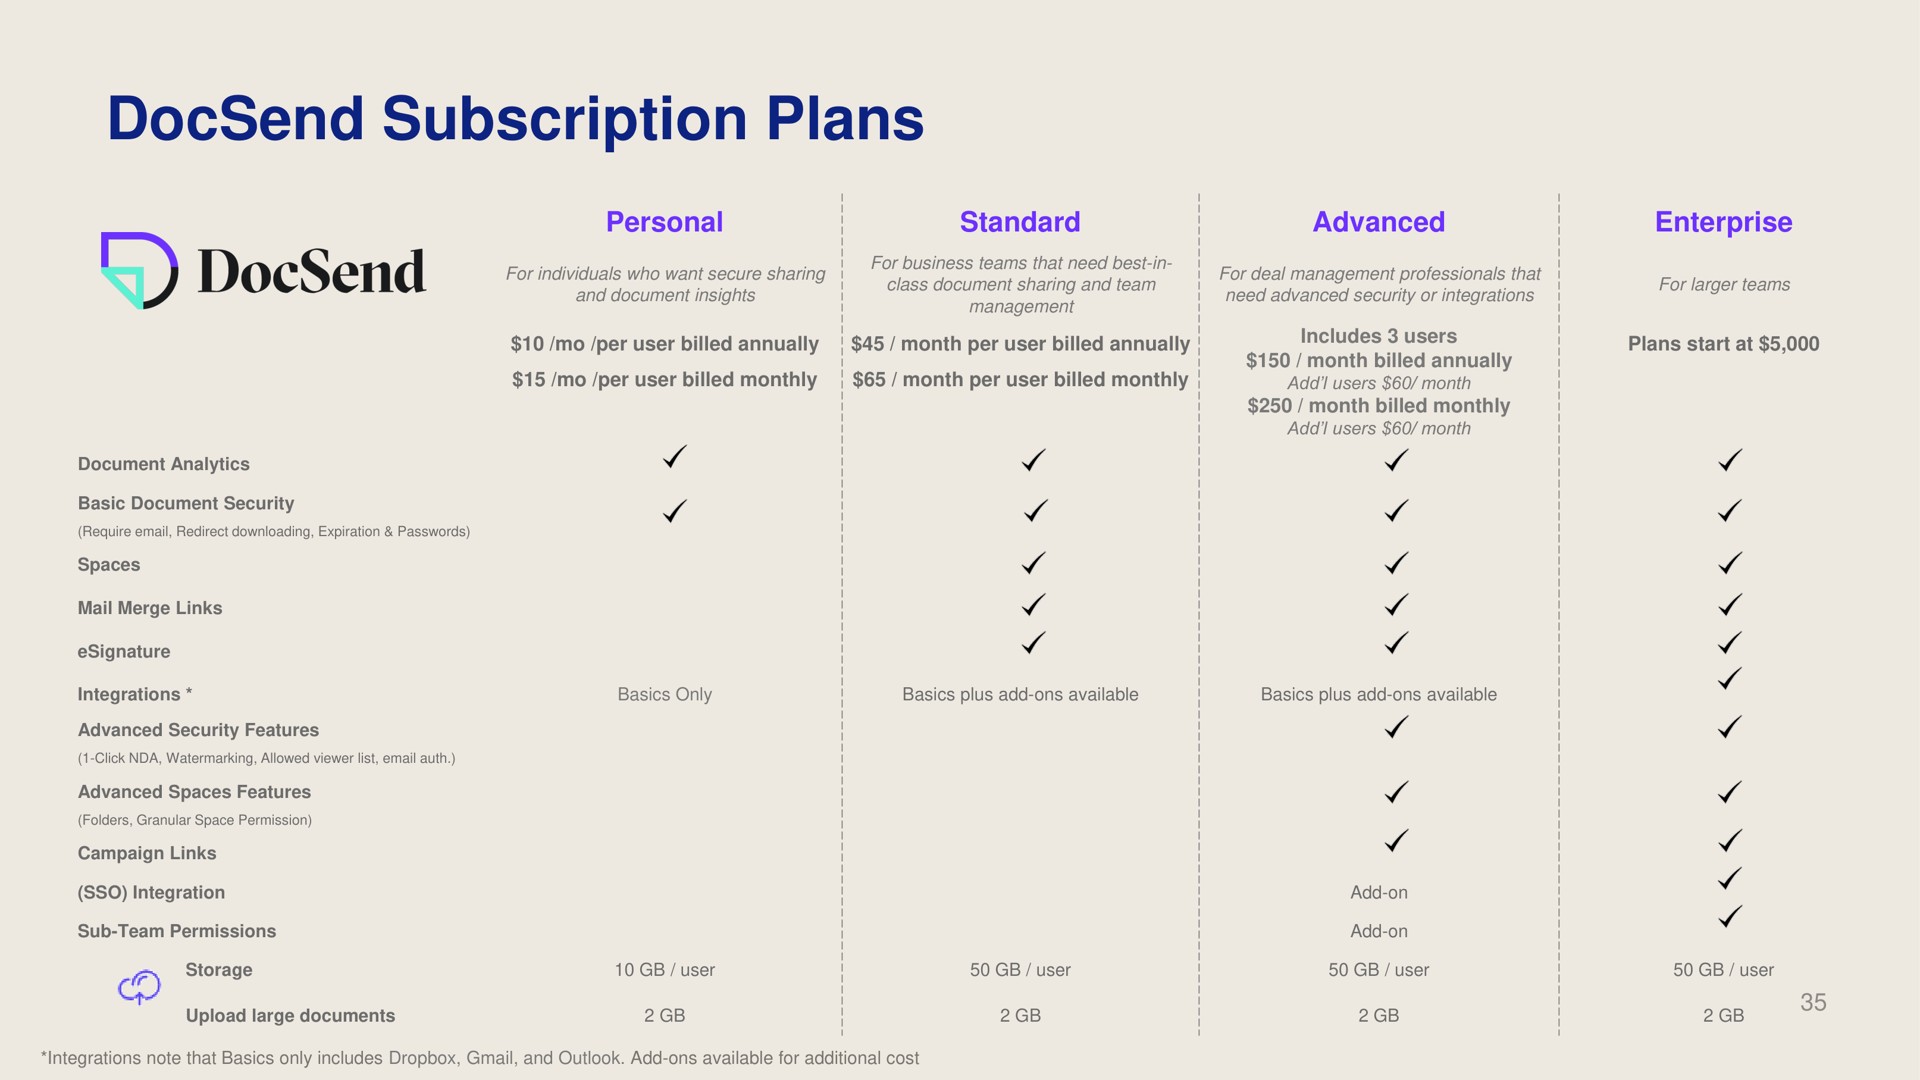 subscription plans a a | Dropbox